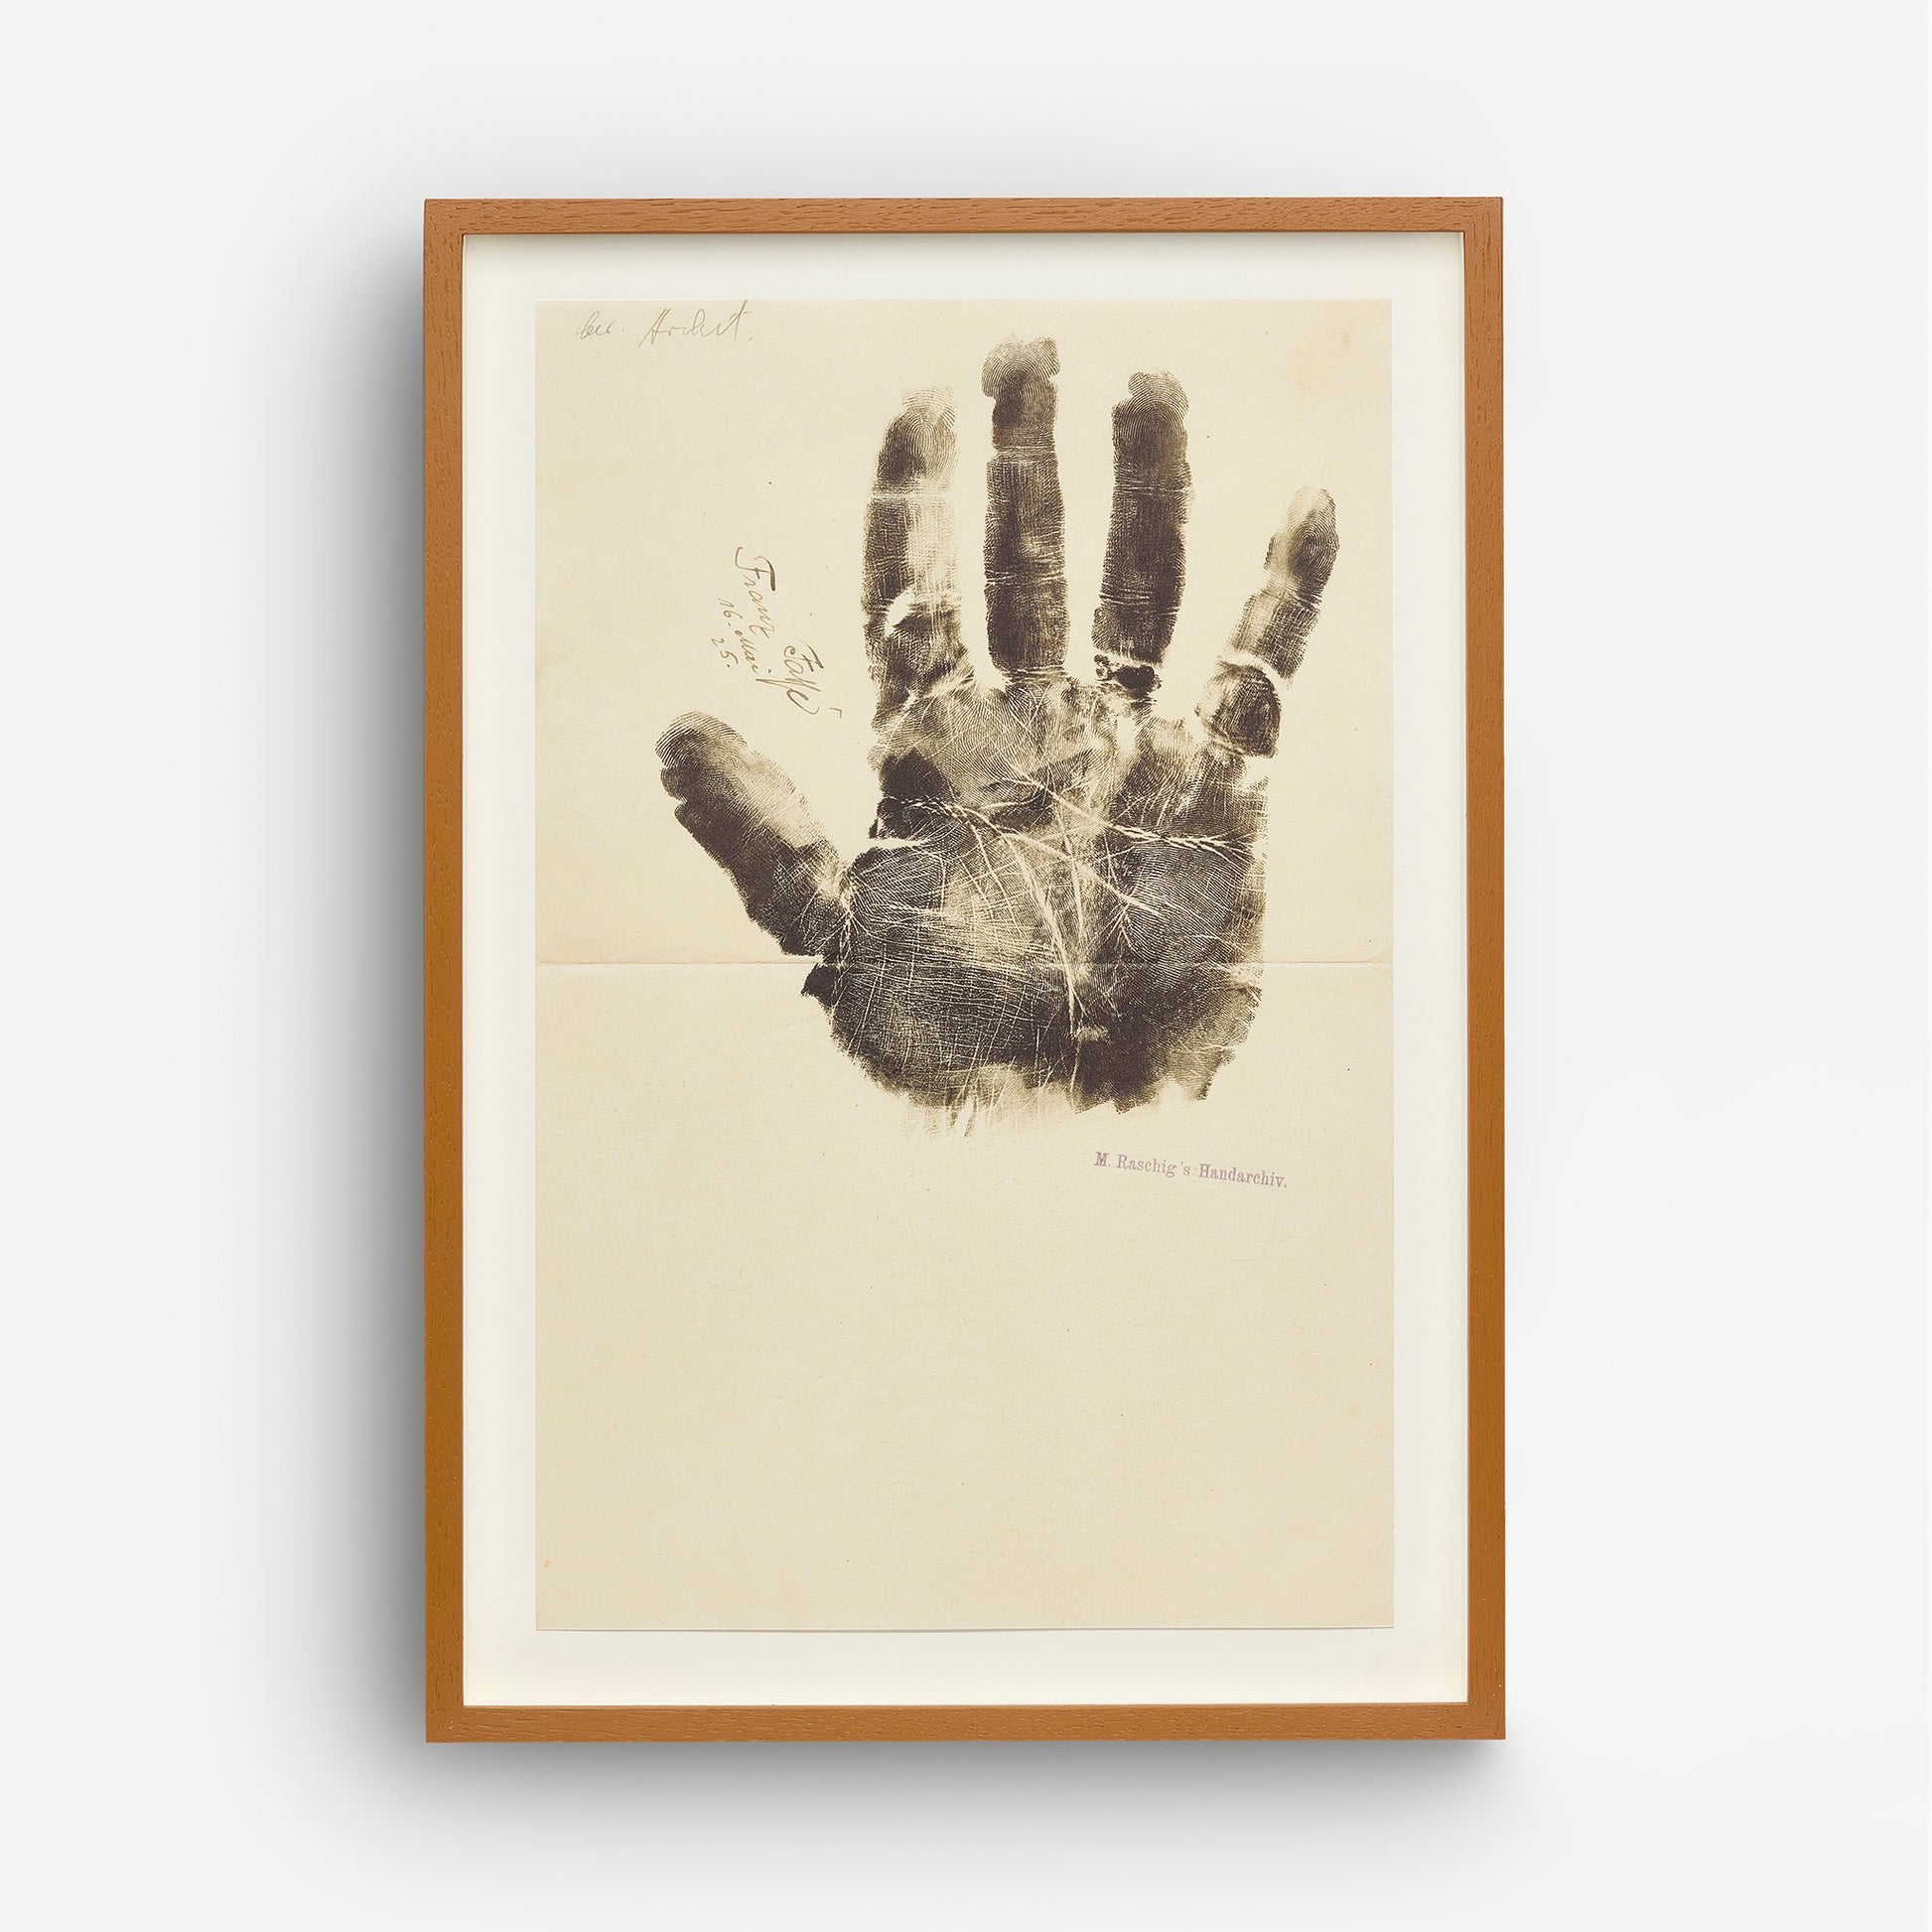 Handprint of Franz Jaffe